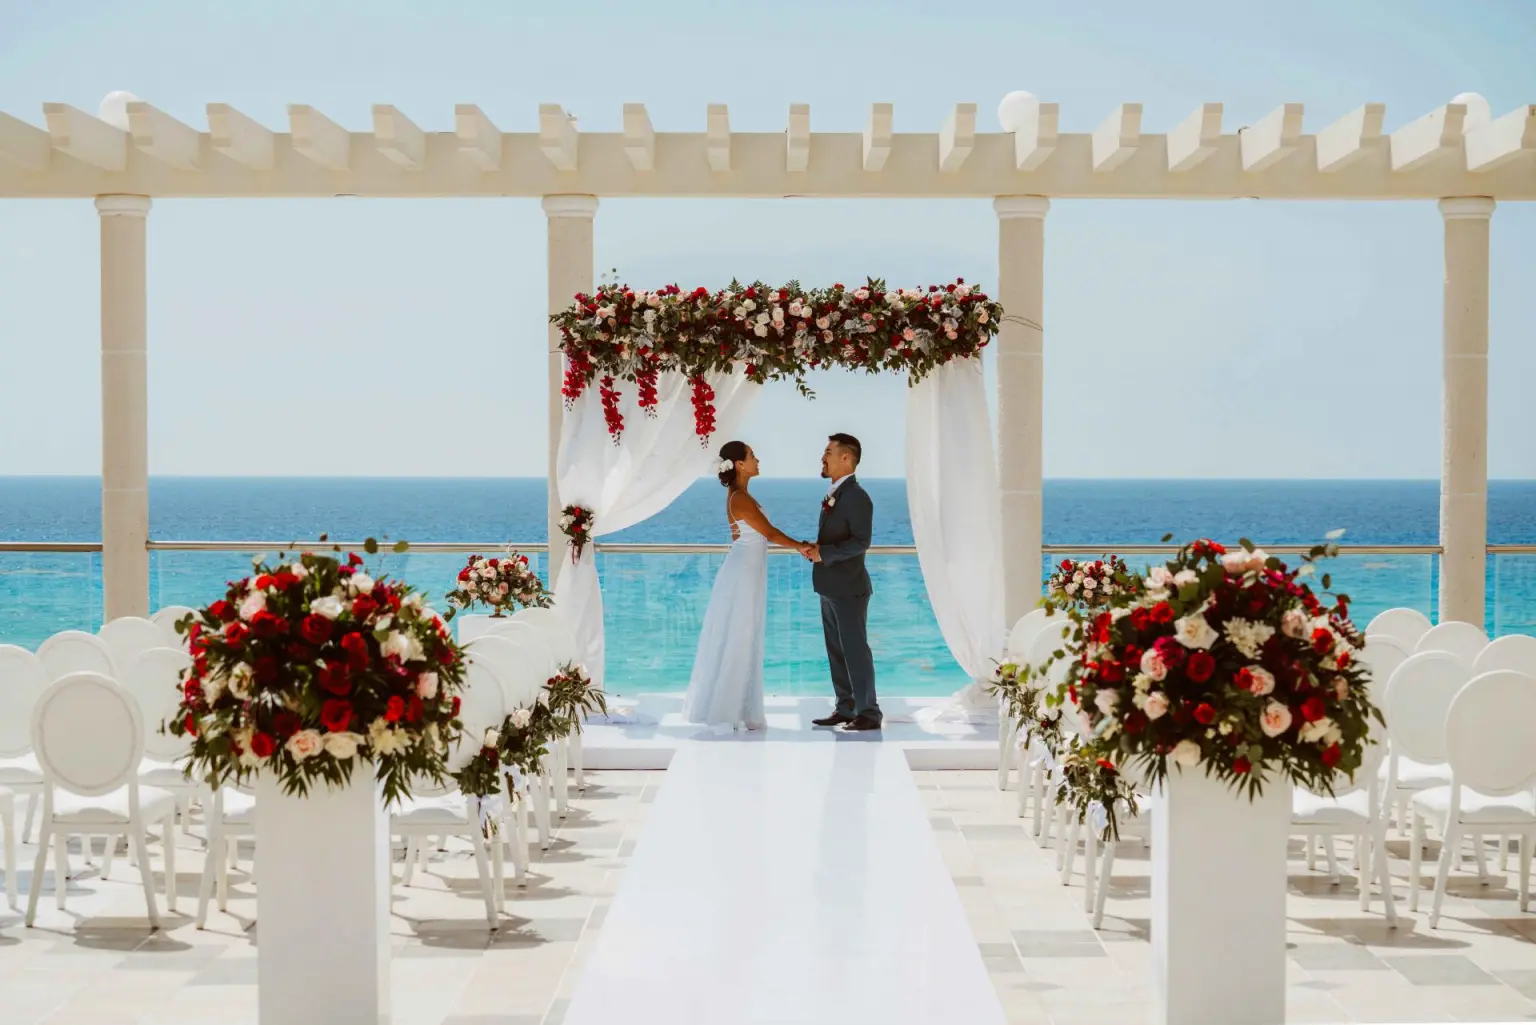 Weddings at Sandos Cancun